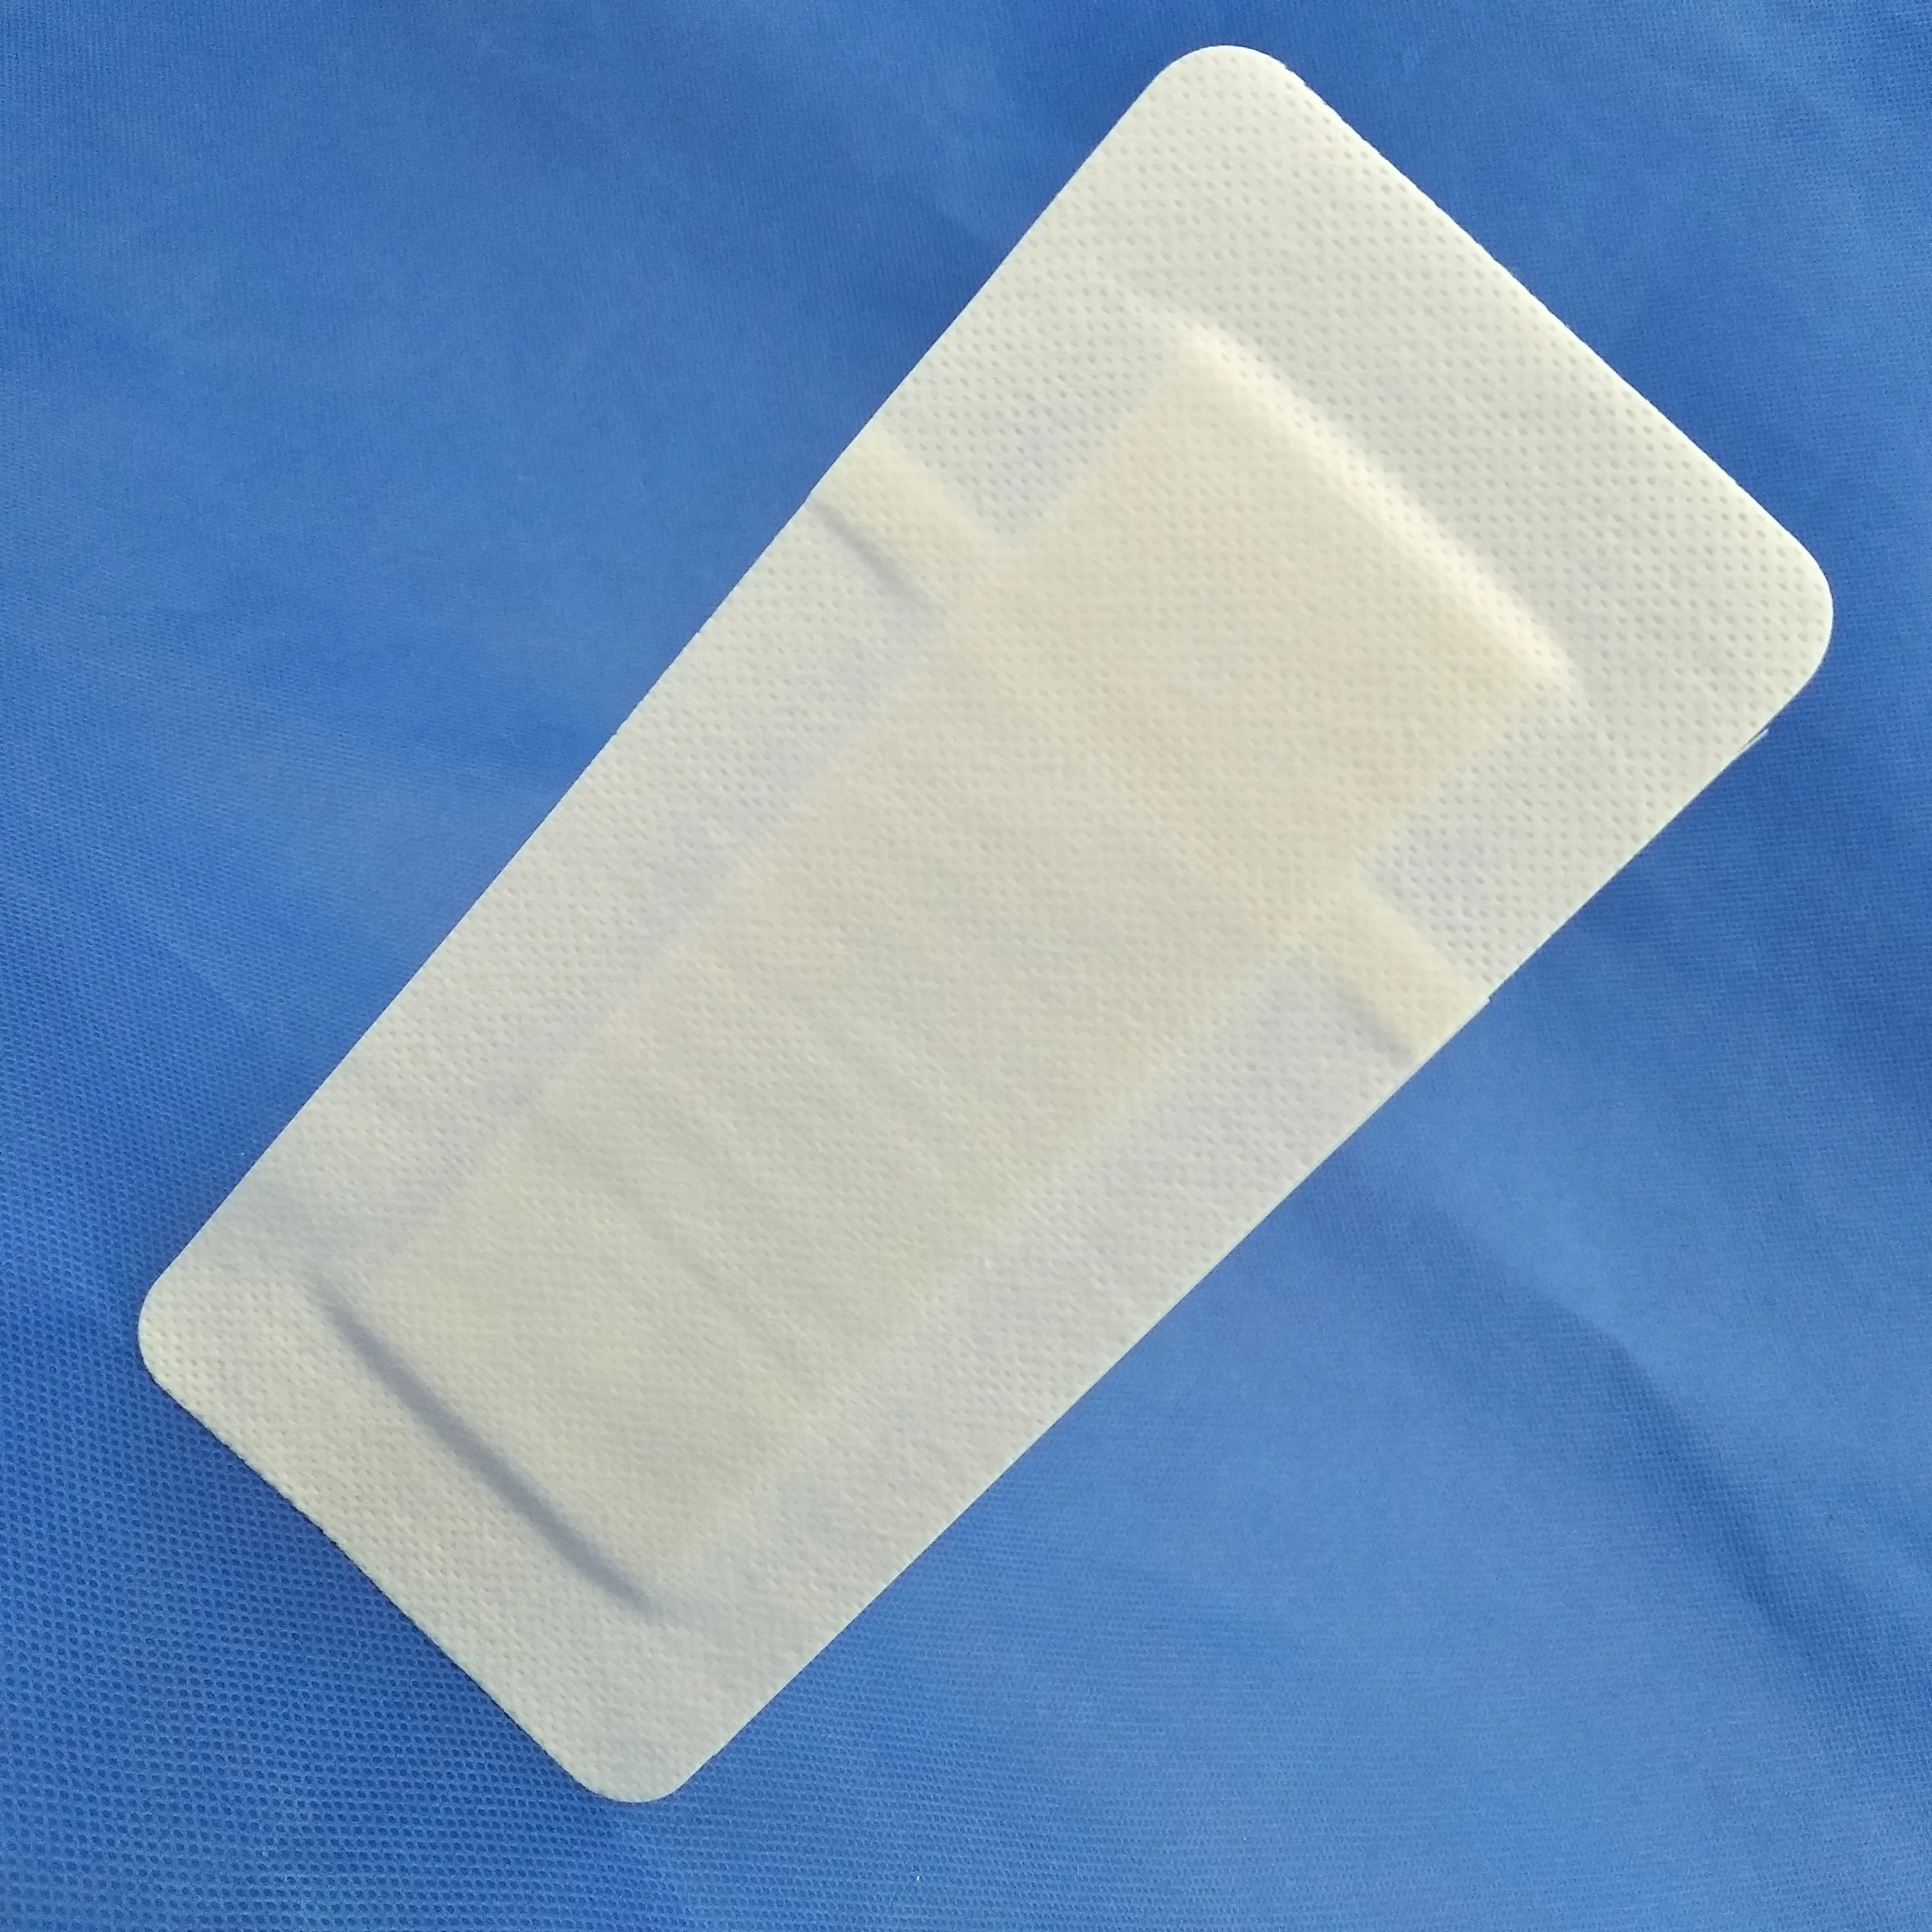 Adhesive Island Dressing Bordered Gauze Wound Dressing Breathable Square Bandage Waterproof Gauze with Pad